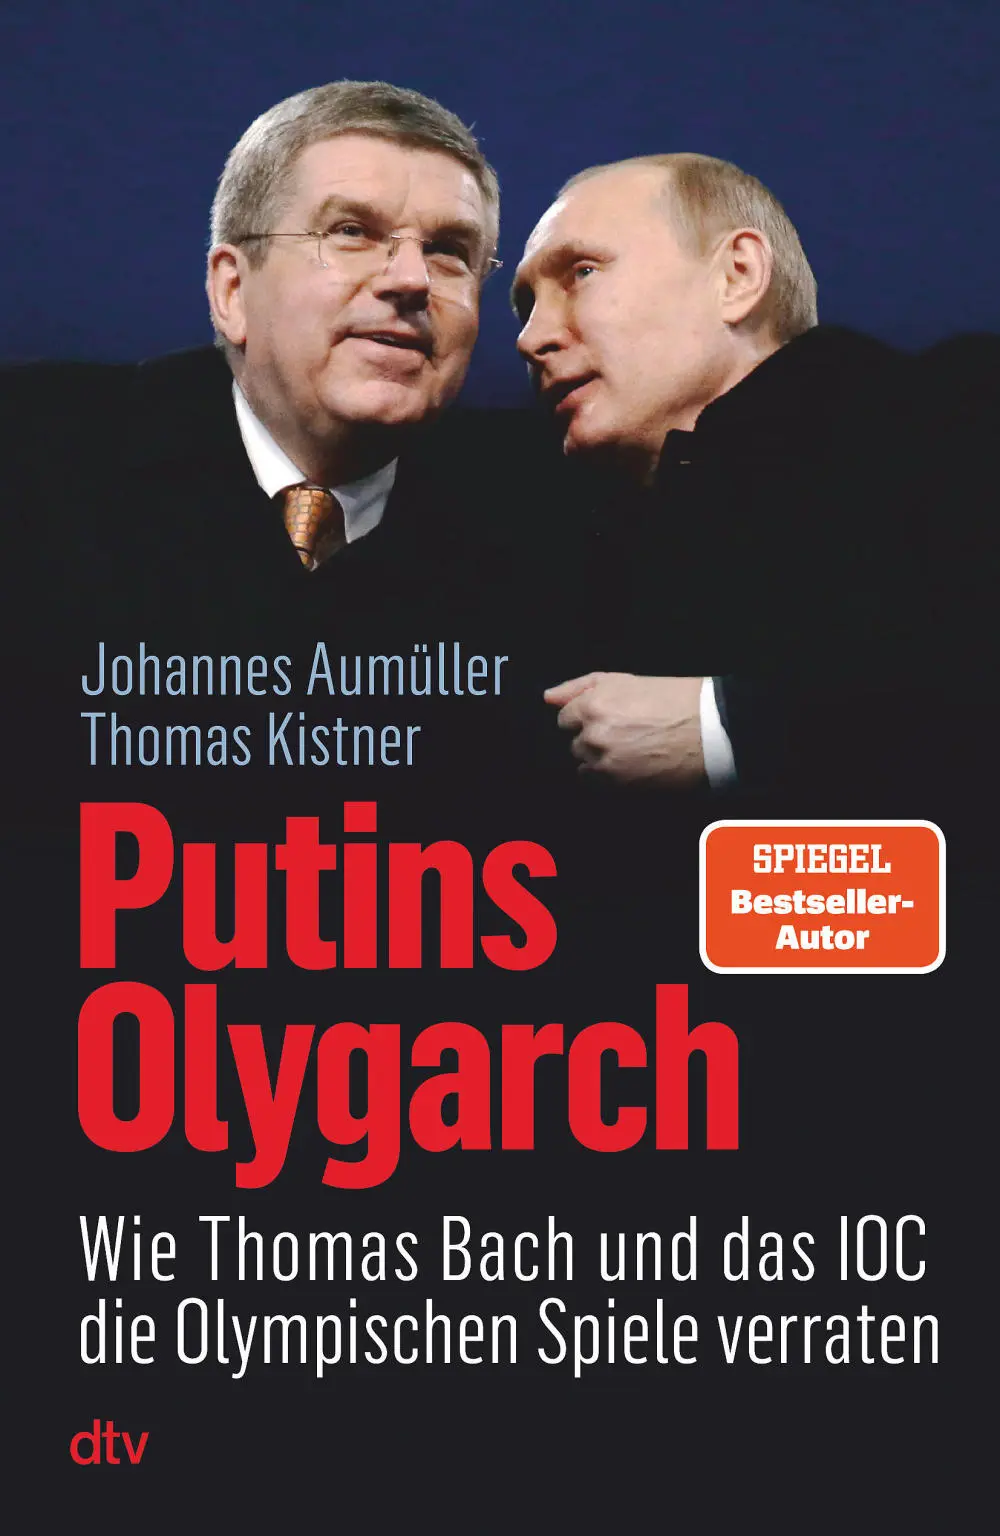 Buchcover: Johannes Aumüller, Thomas Kistner: Putins Olygarch.